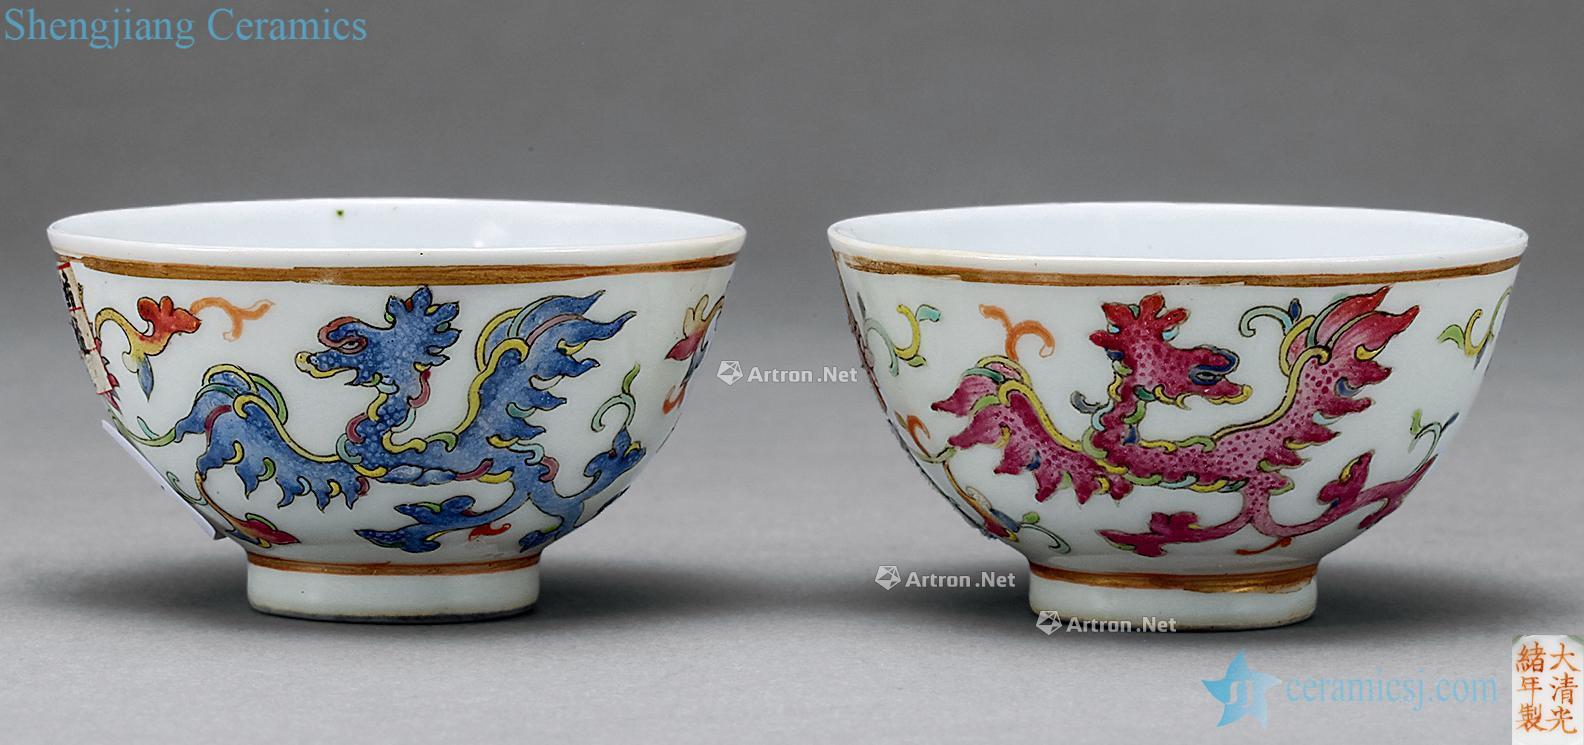 Pastel reign of qing emperor guangxu real talent grain cup (2)